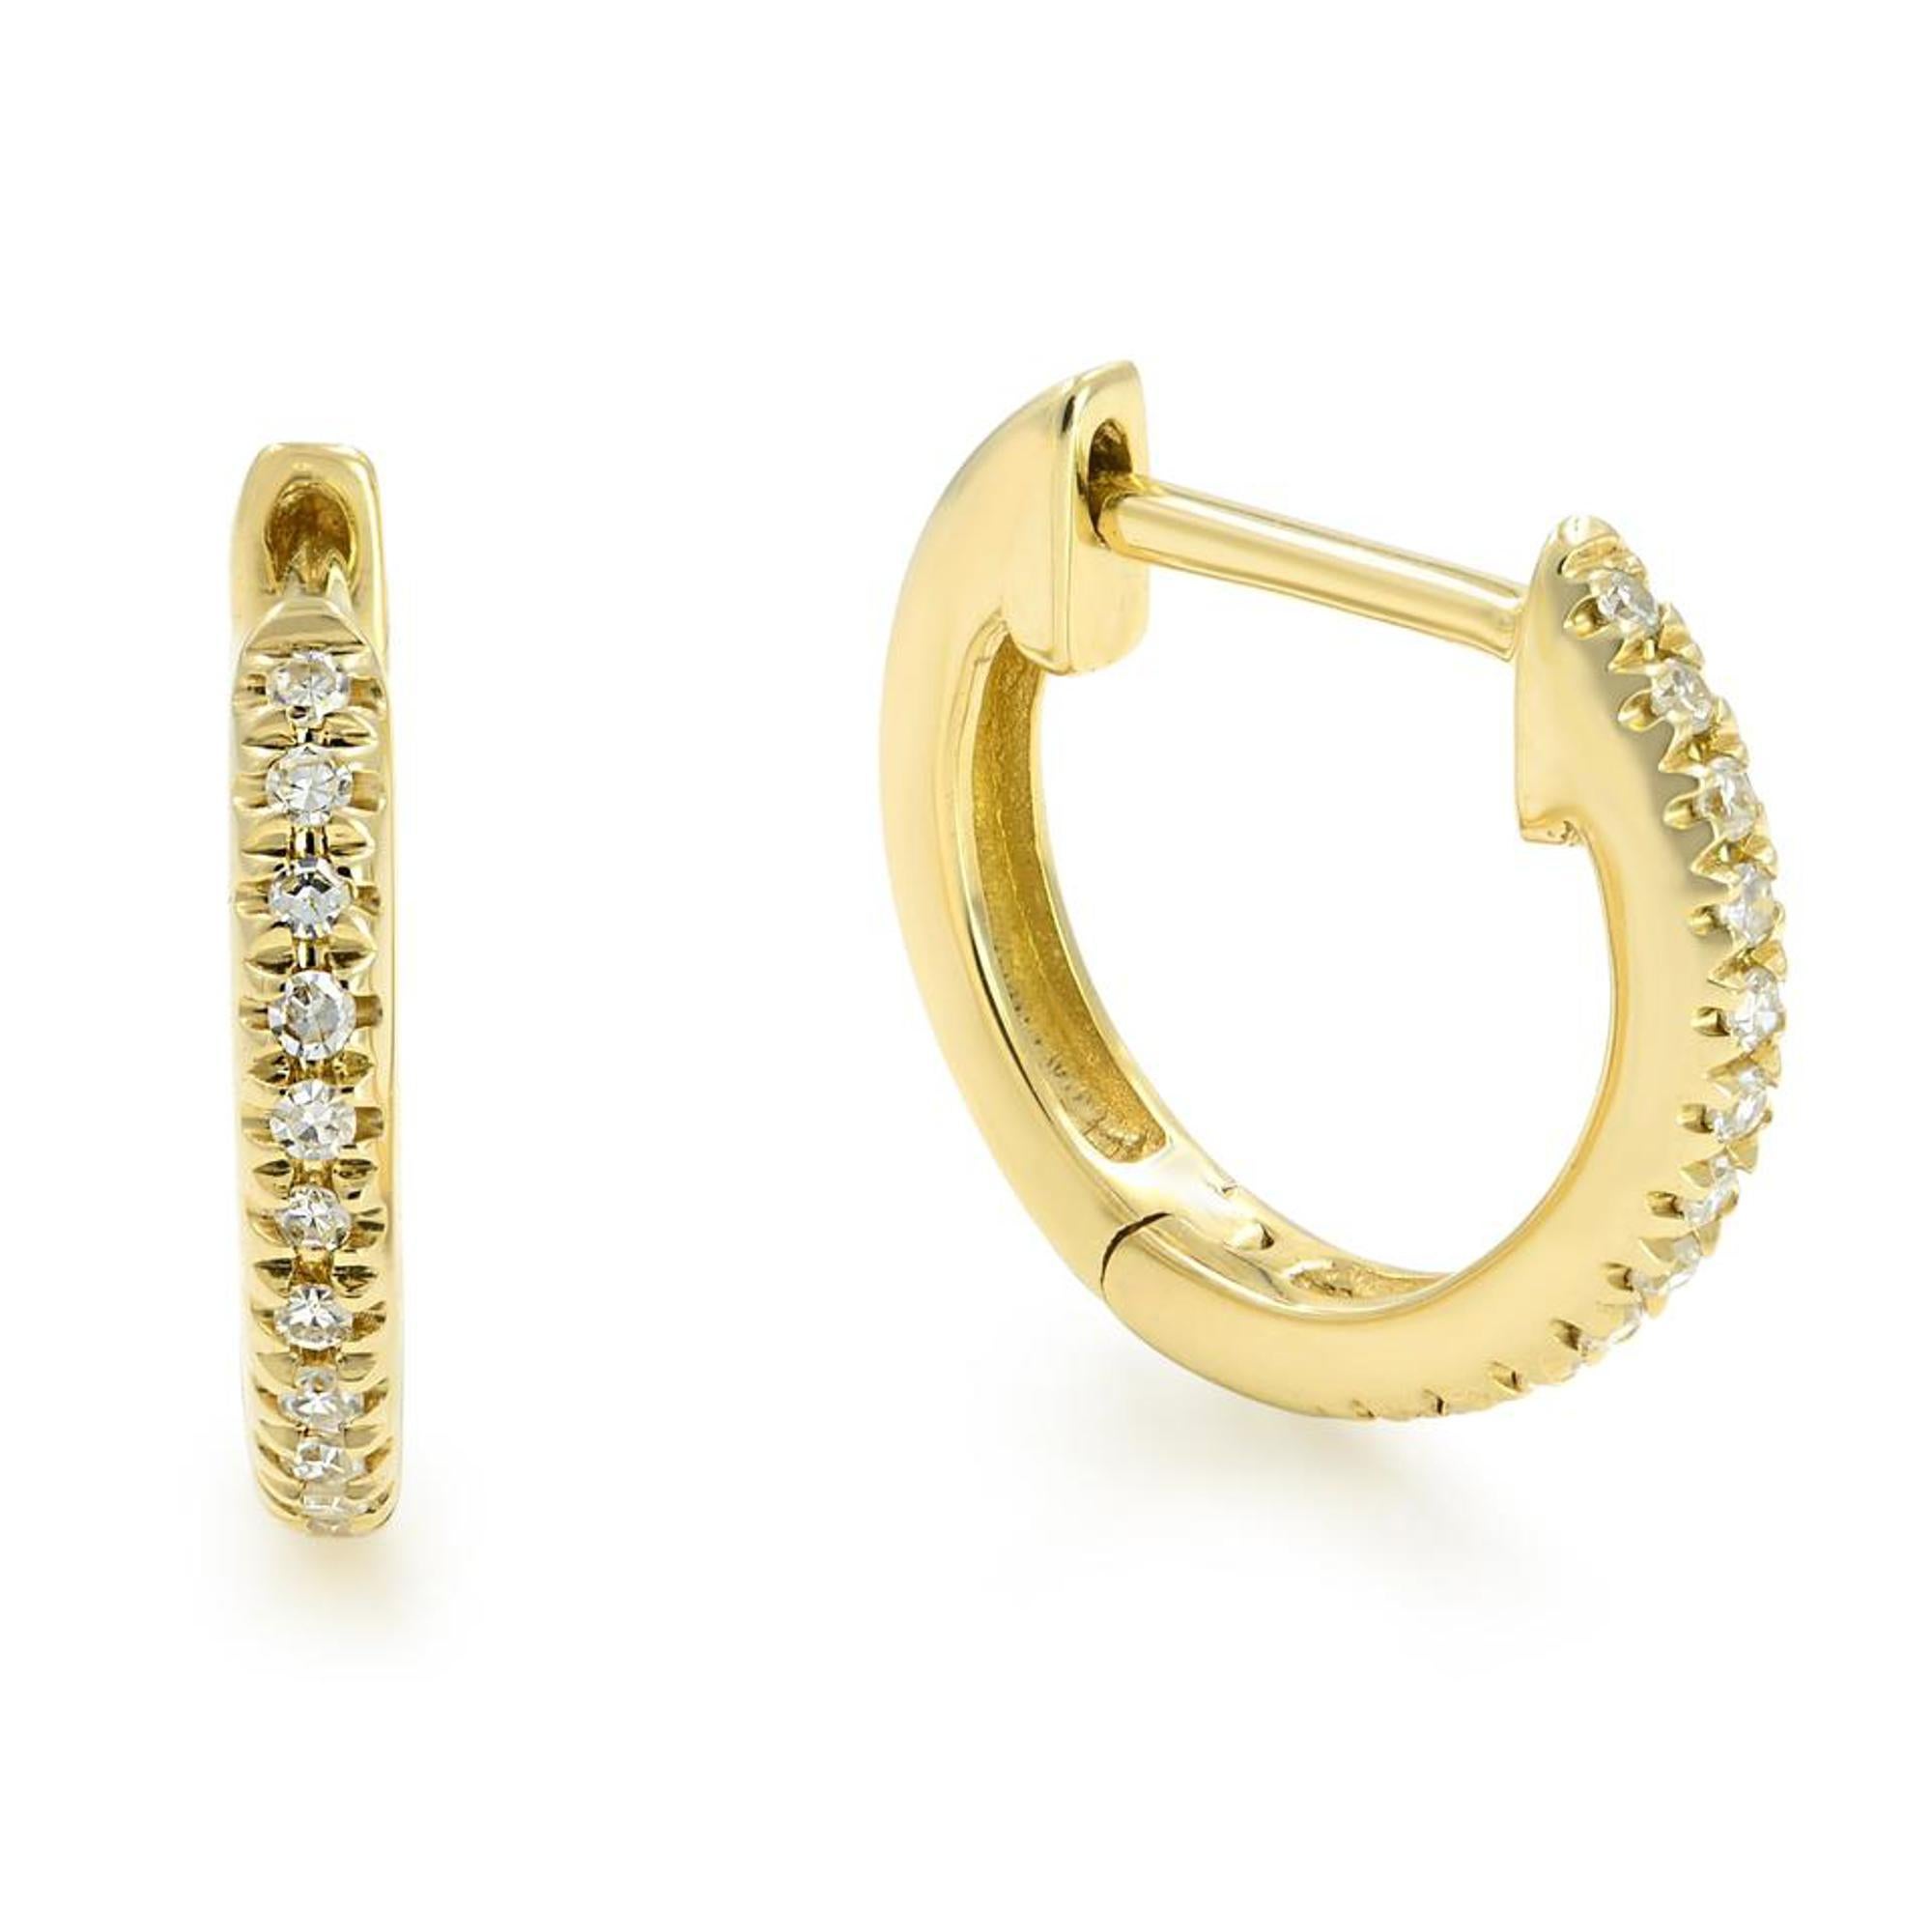 Round Cut Rachel Koen Pave Diamond Huggie Earrings 14K Yellow Gold 0.08Cttw For Sale